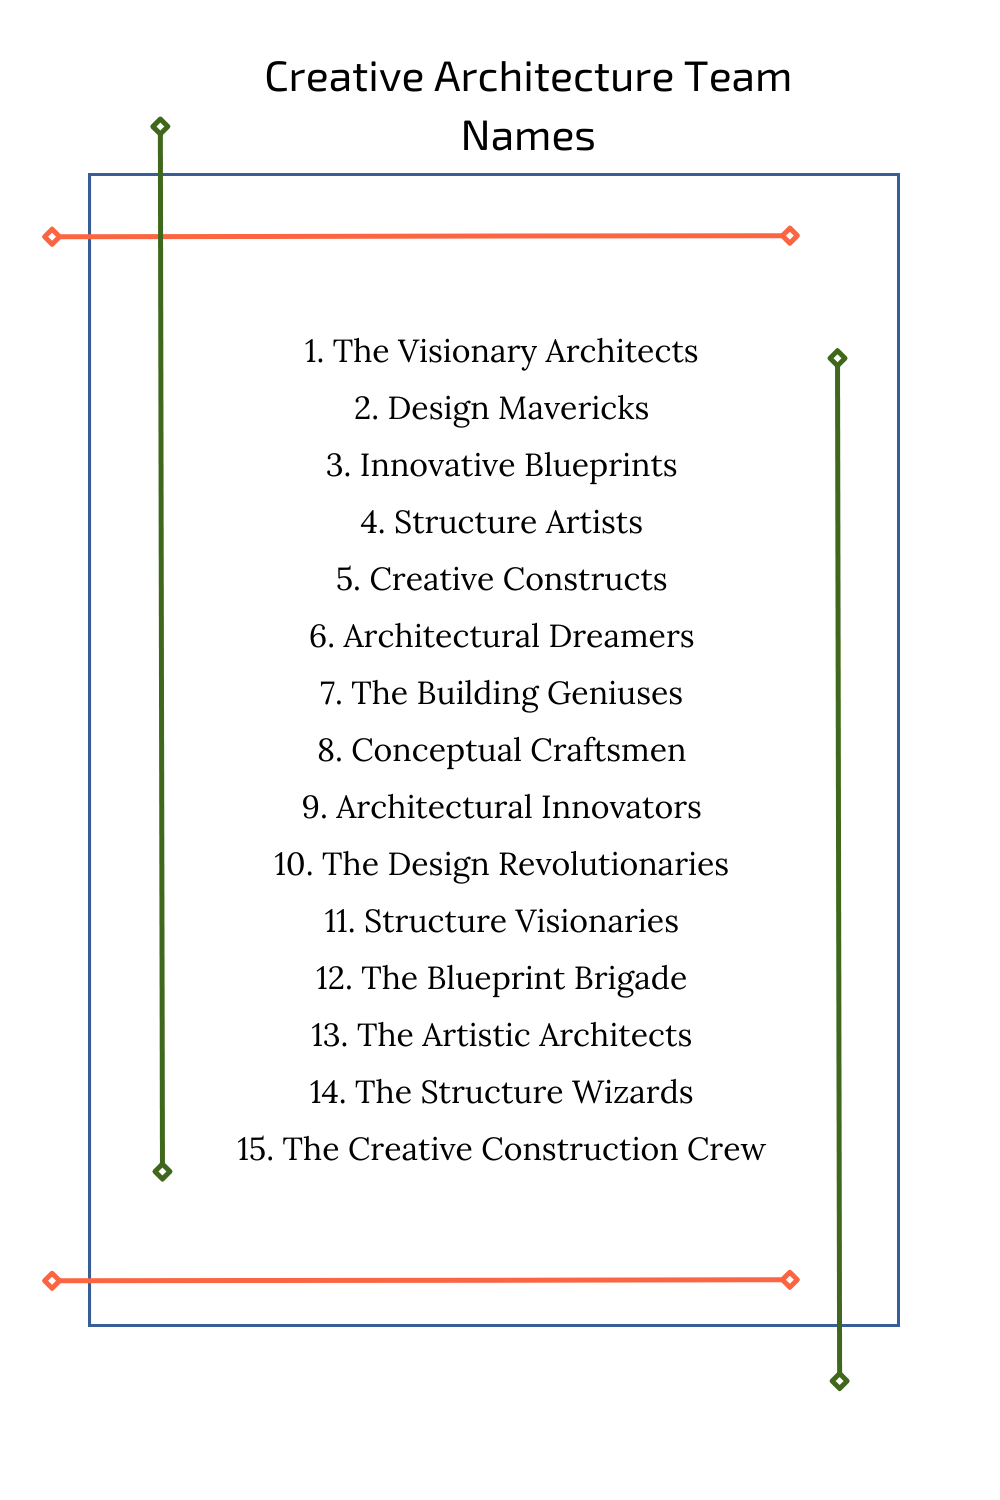 Creative Architecture Team Names